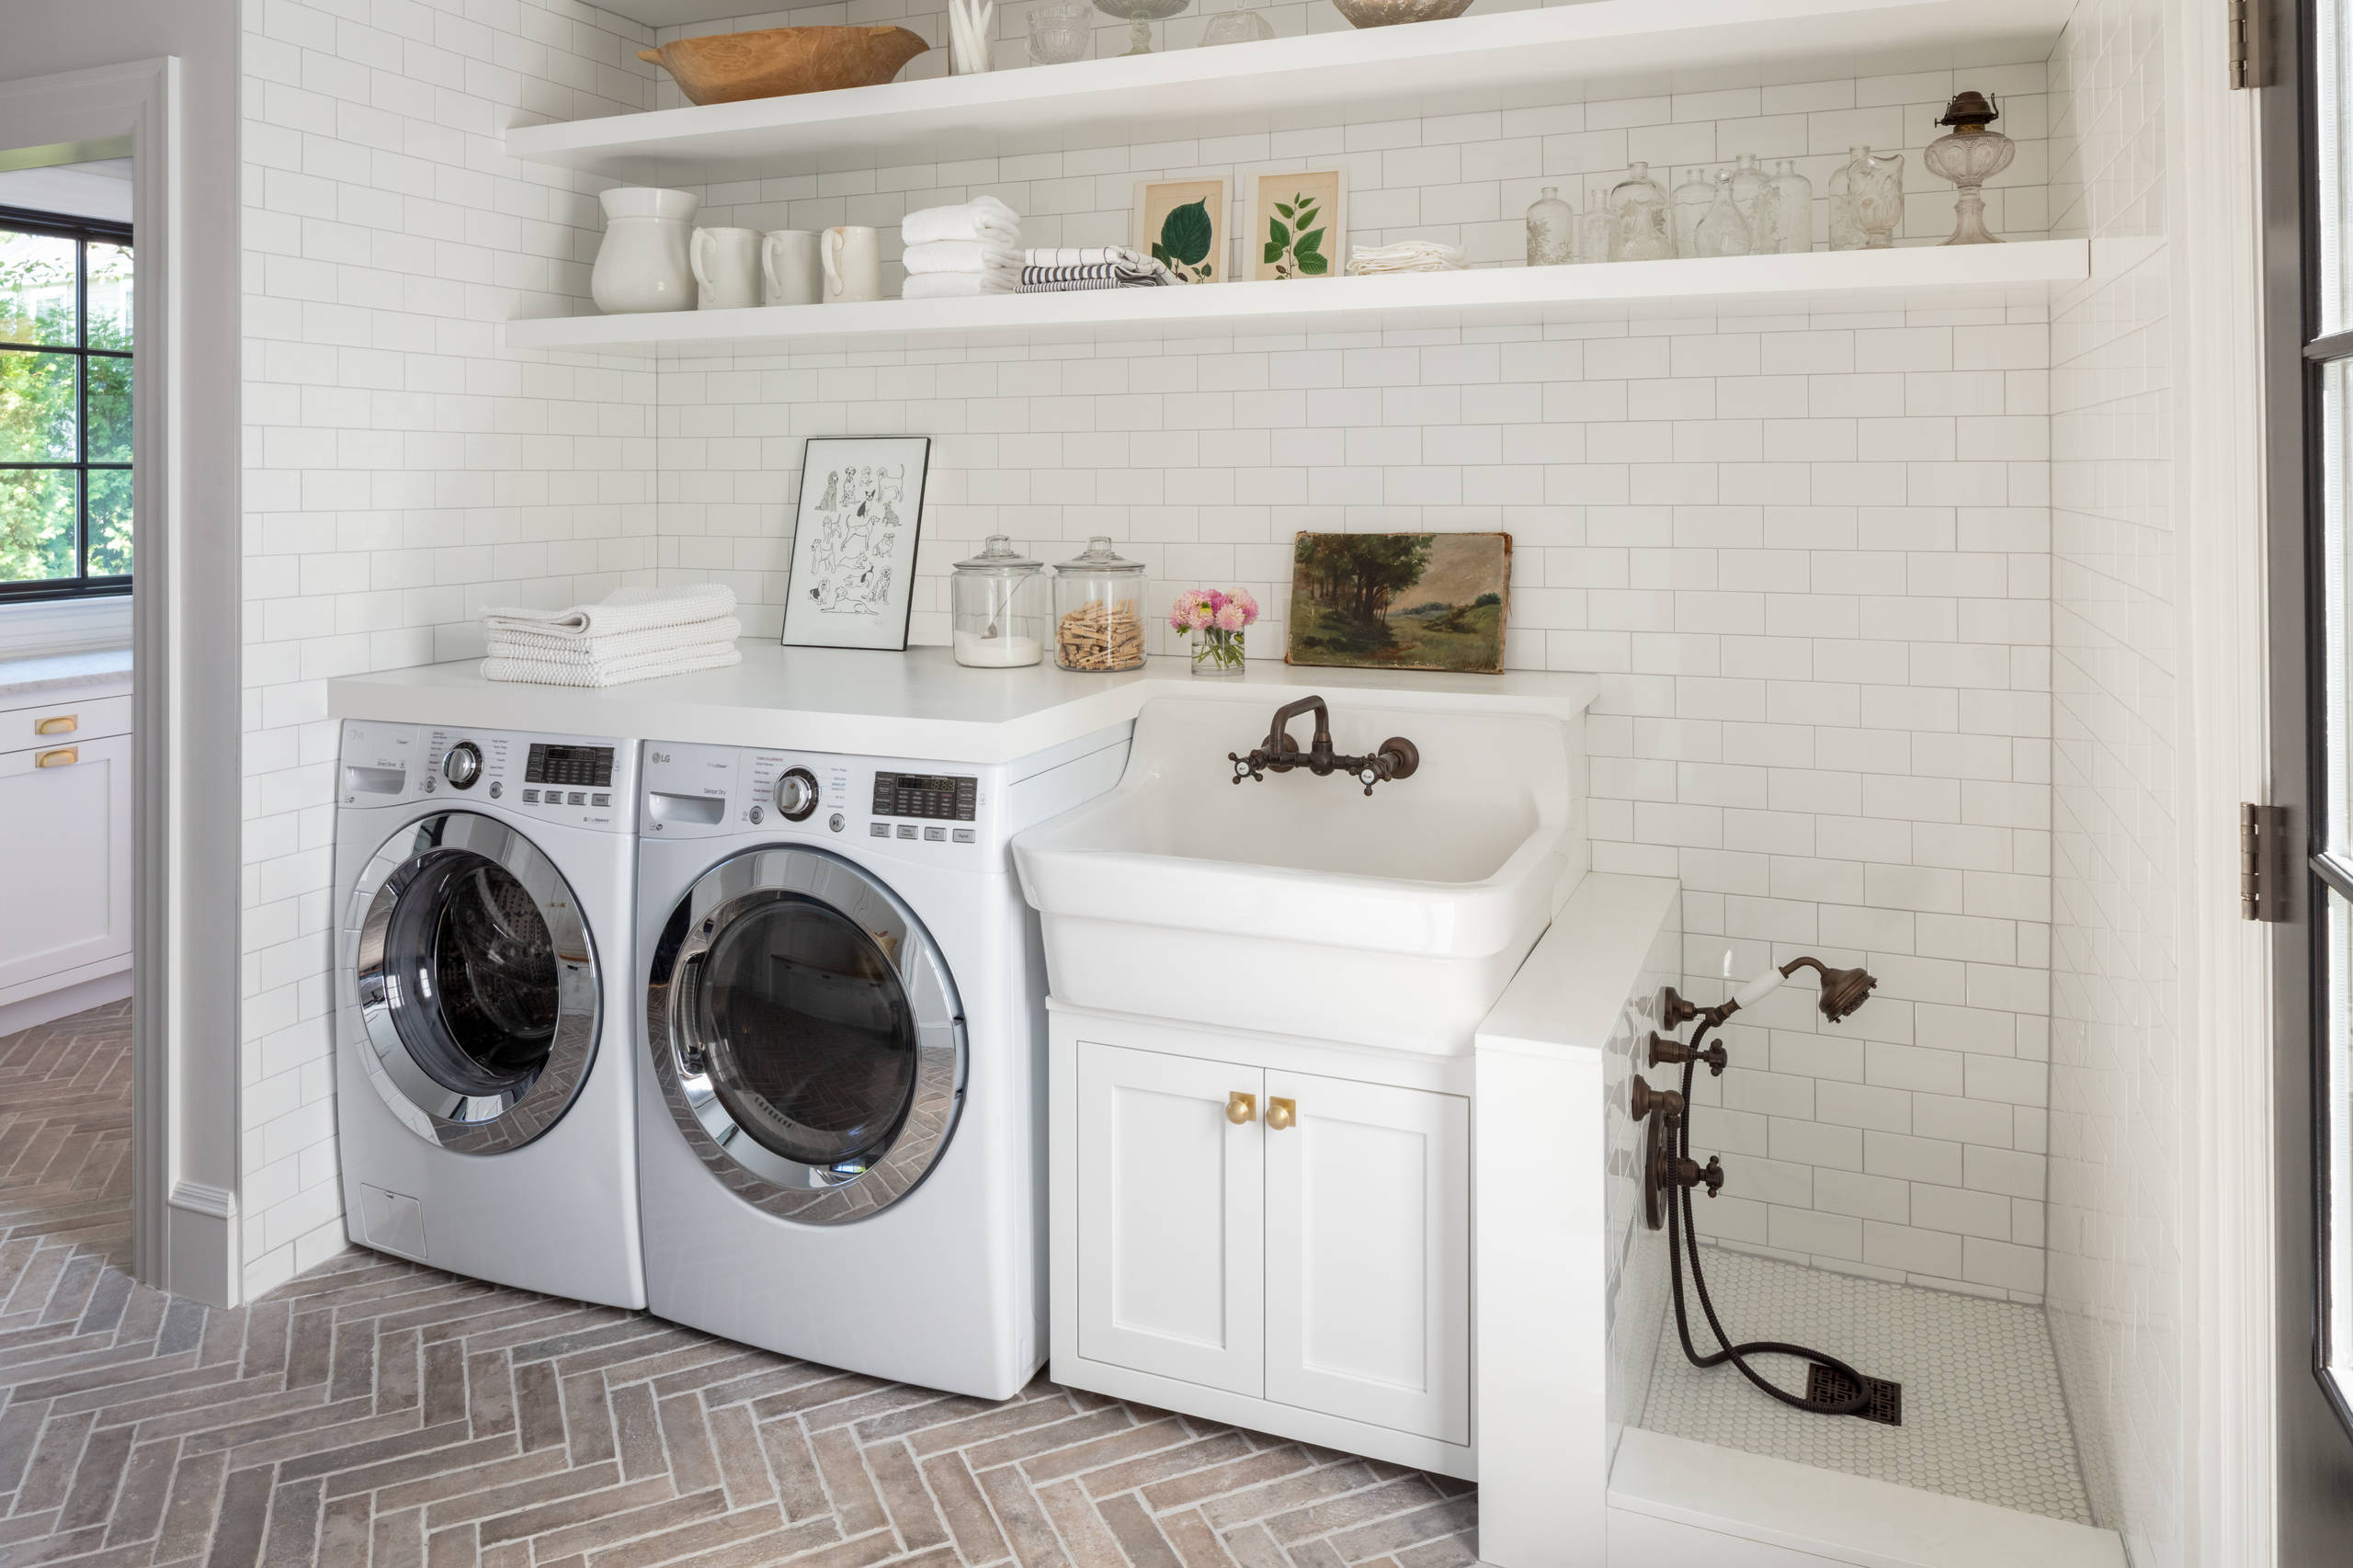 75 Laundry Room with a Farmhouse Sink Ideas You'll Love - February, 2023 |  Houzz